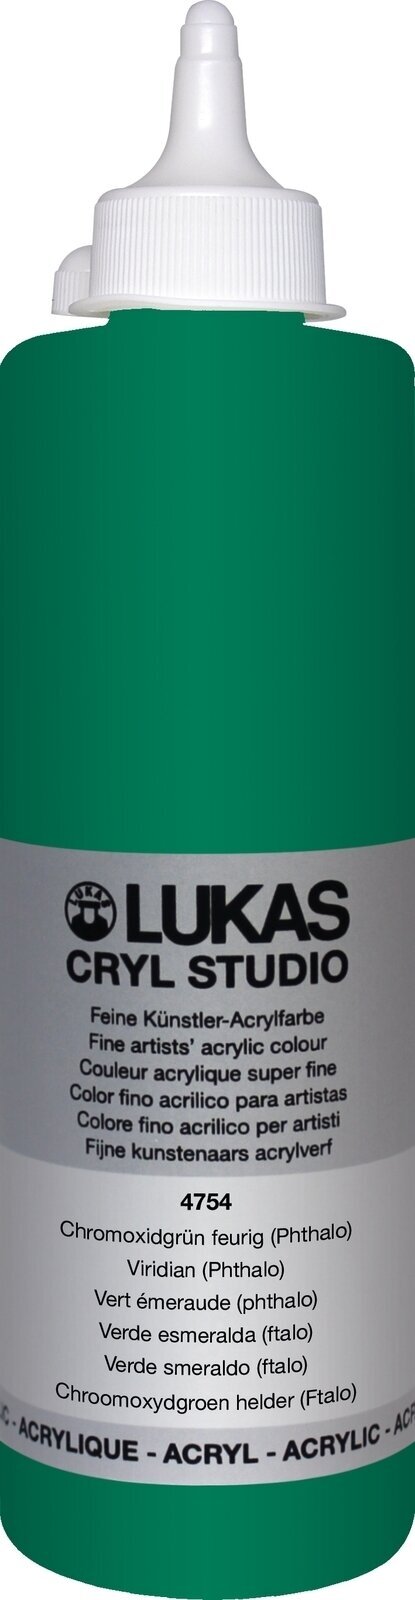 Acrylic Paint Lukas Cryl Studio Acrylic Paint Plastic Bottle Acrylic Paint Viridian (Phthalo) 500 ml 1 pc